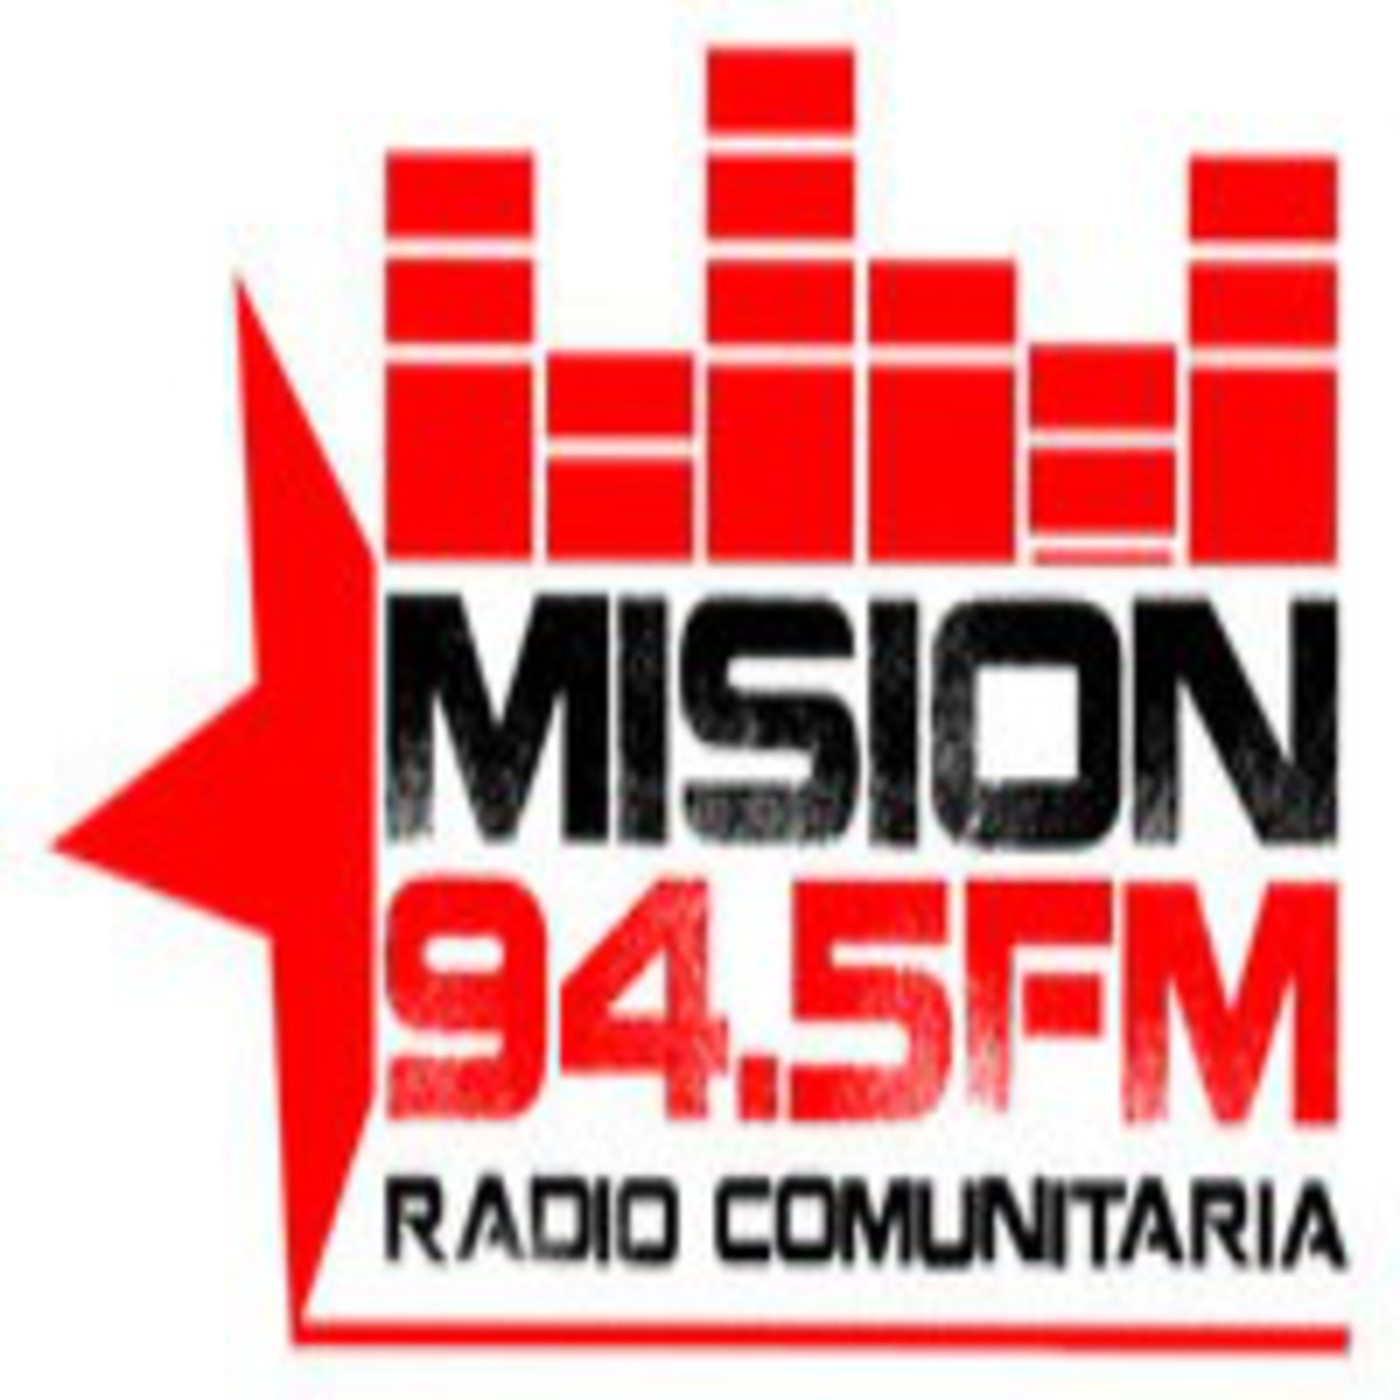 Lucro diferente a Encommium Podcast Radio Comunitaria Mision Stereo 94.5fm - Podcast en iVoox